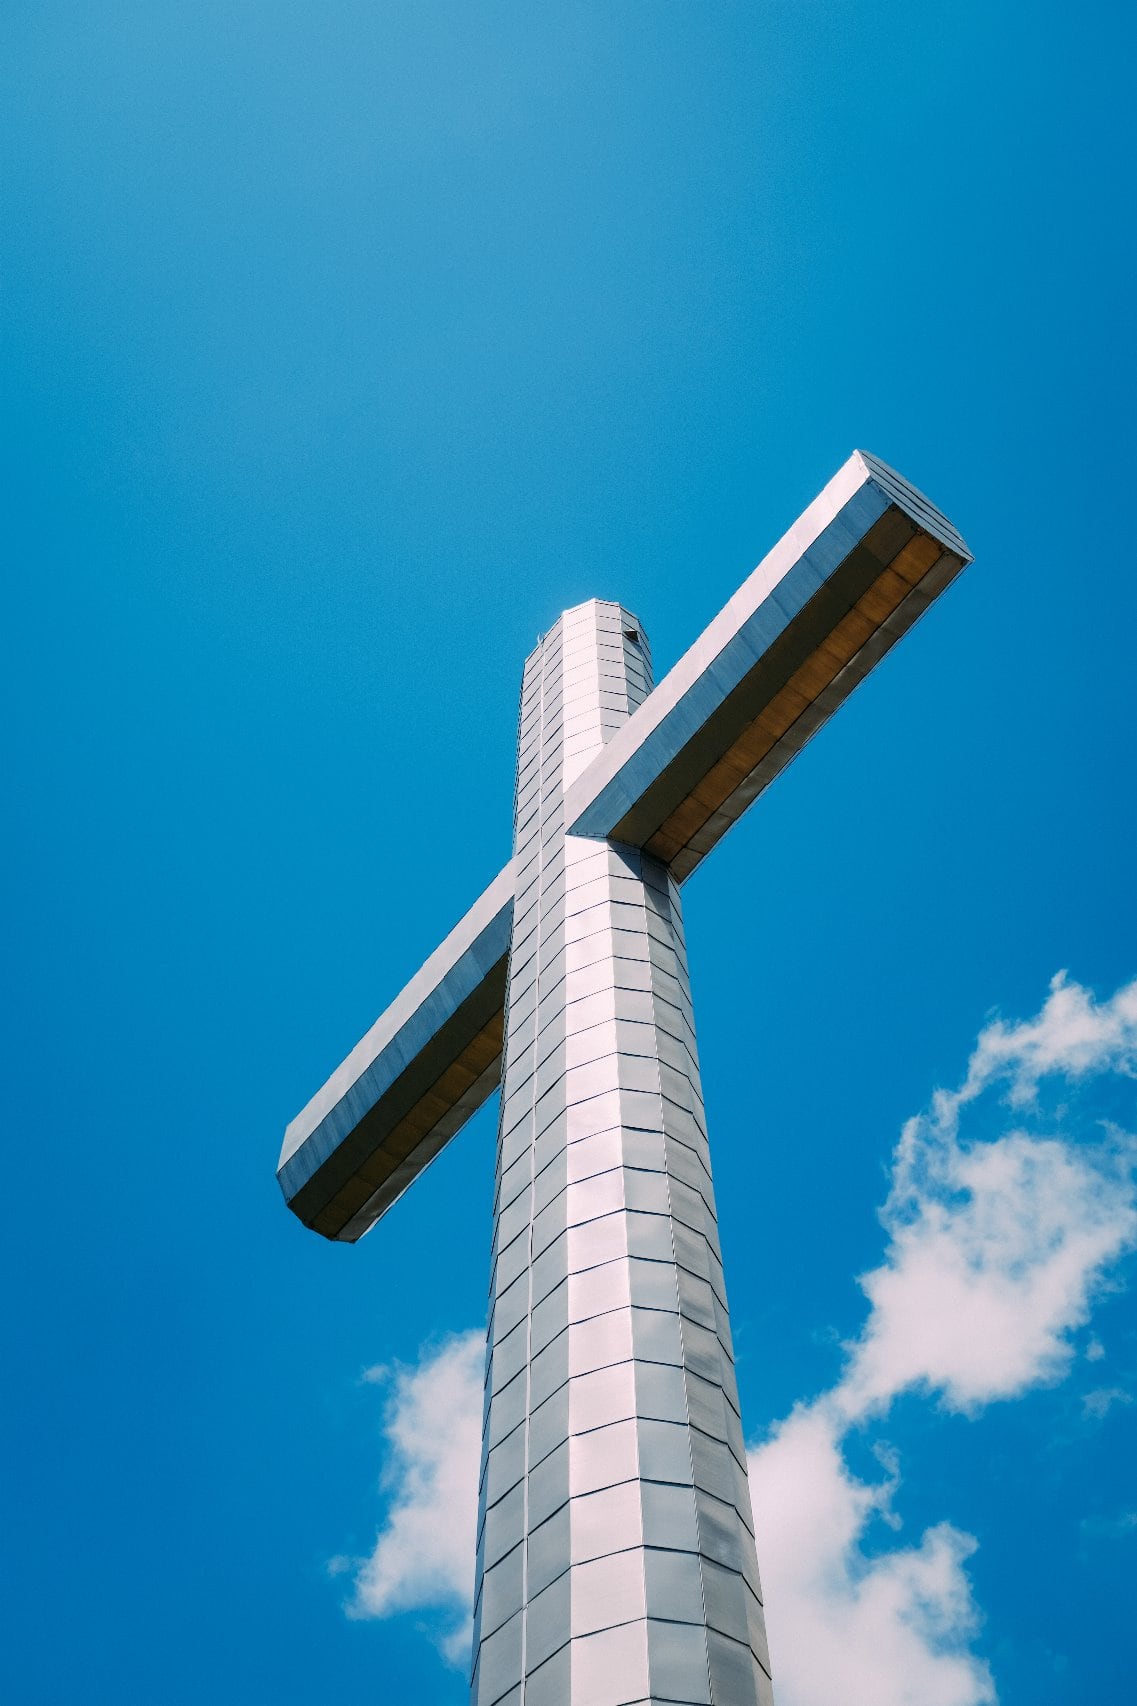 Metal Christian cross against blue sky